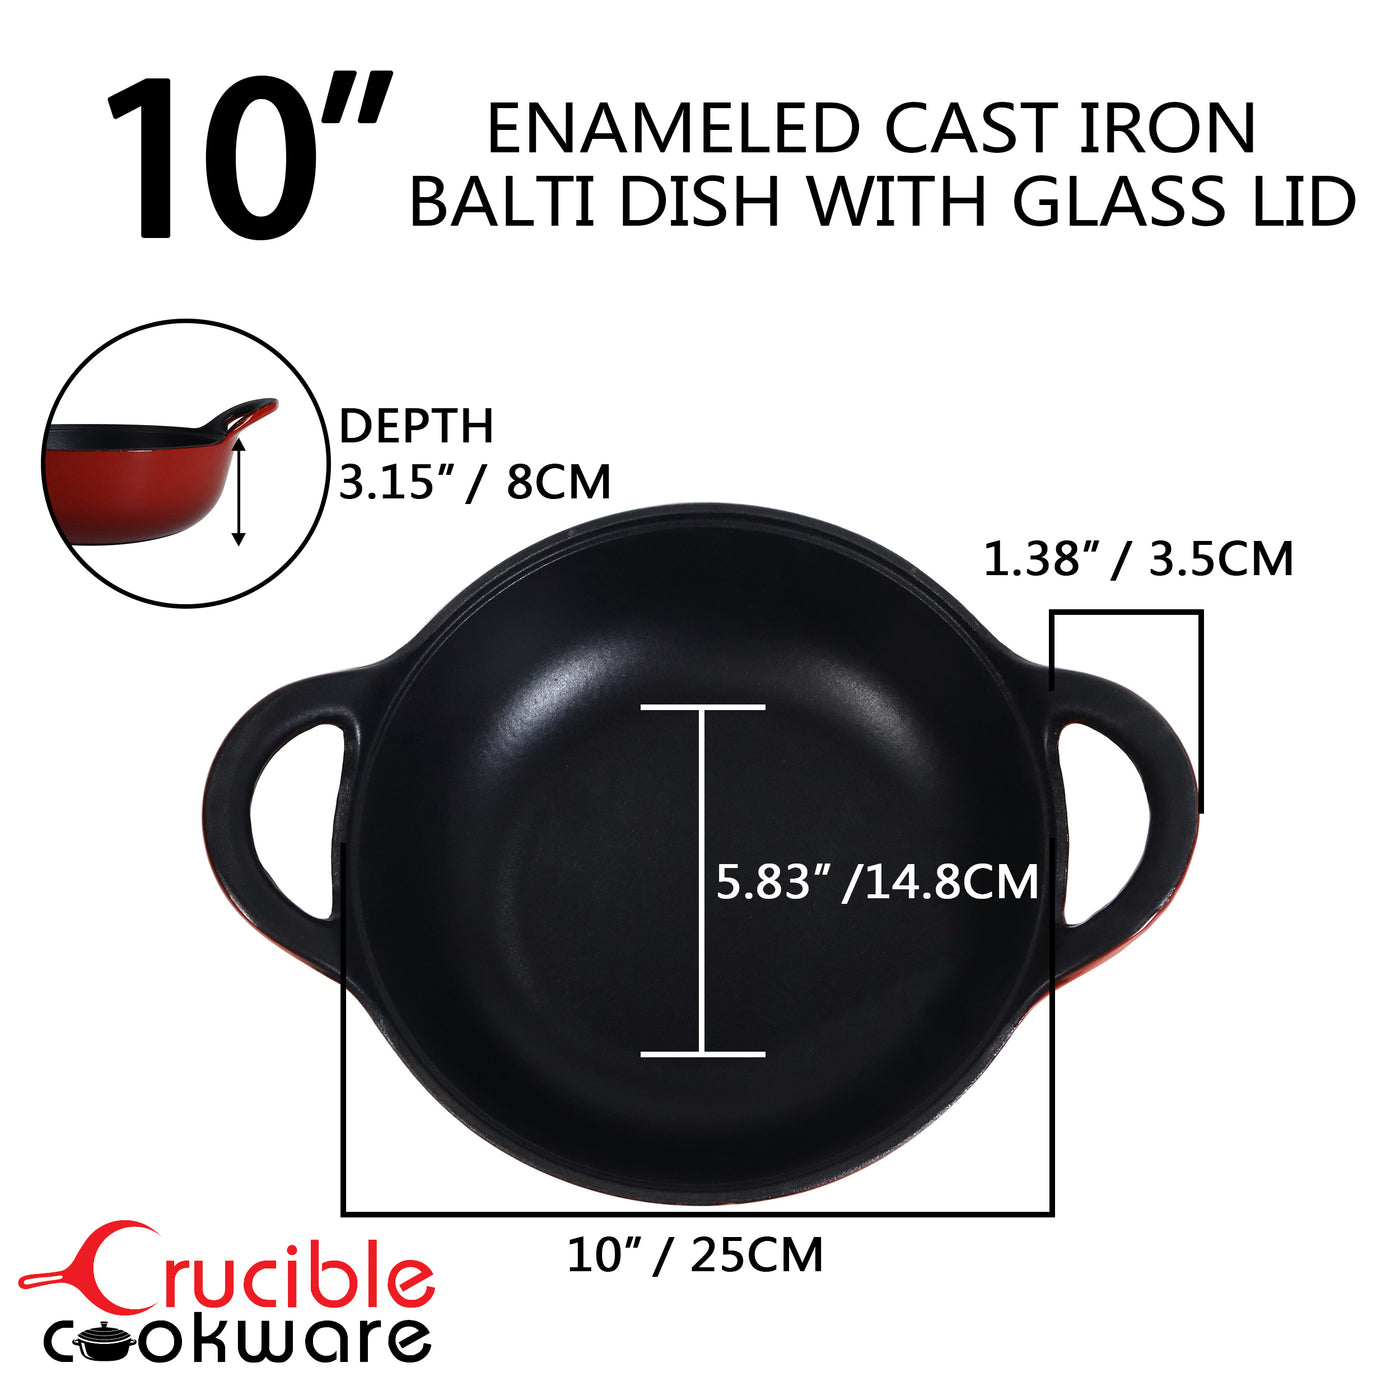 Prato Balti de ferro fundido esmaltado com tampa de vidro, caçarola média de ferro fundido de 3 quartos